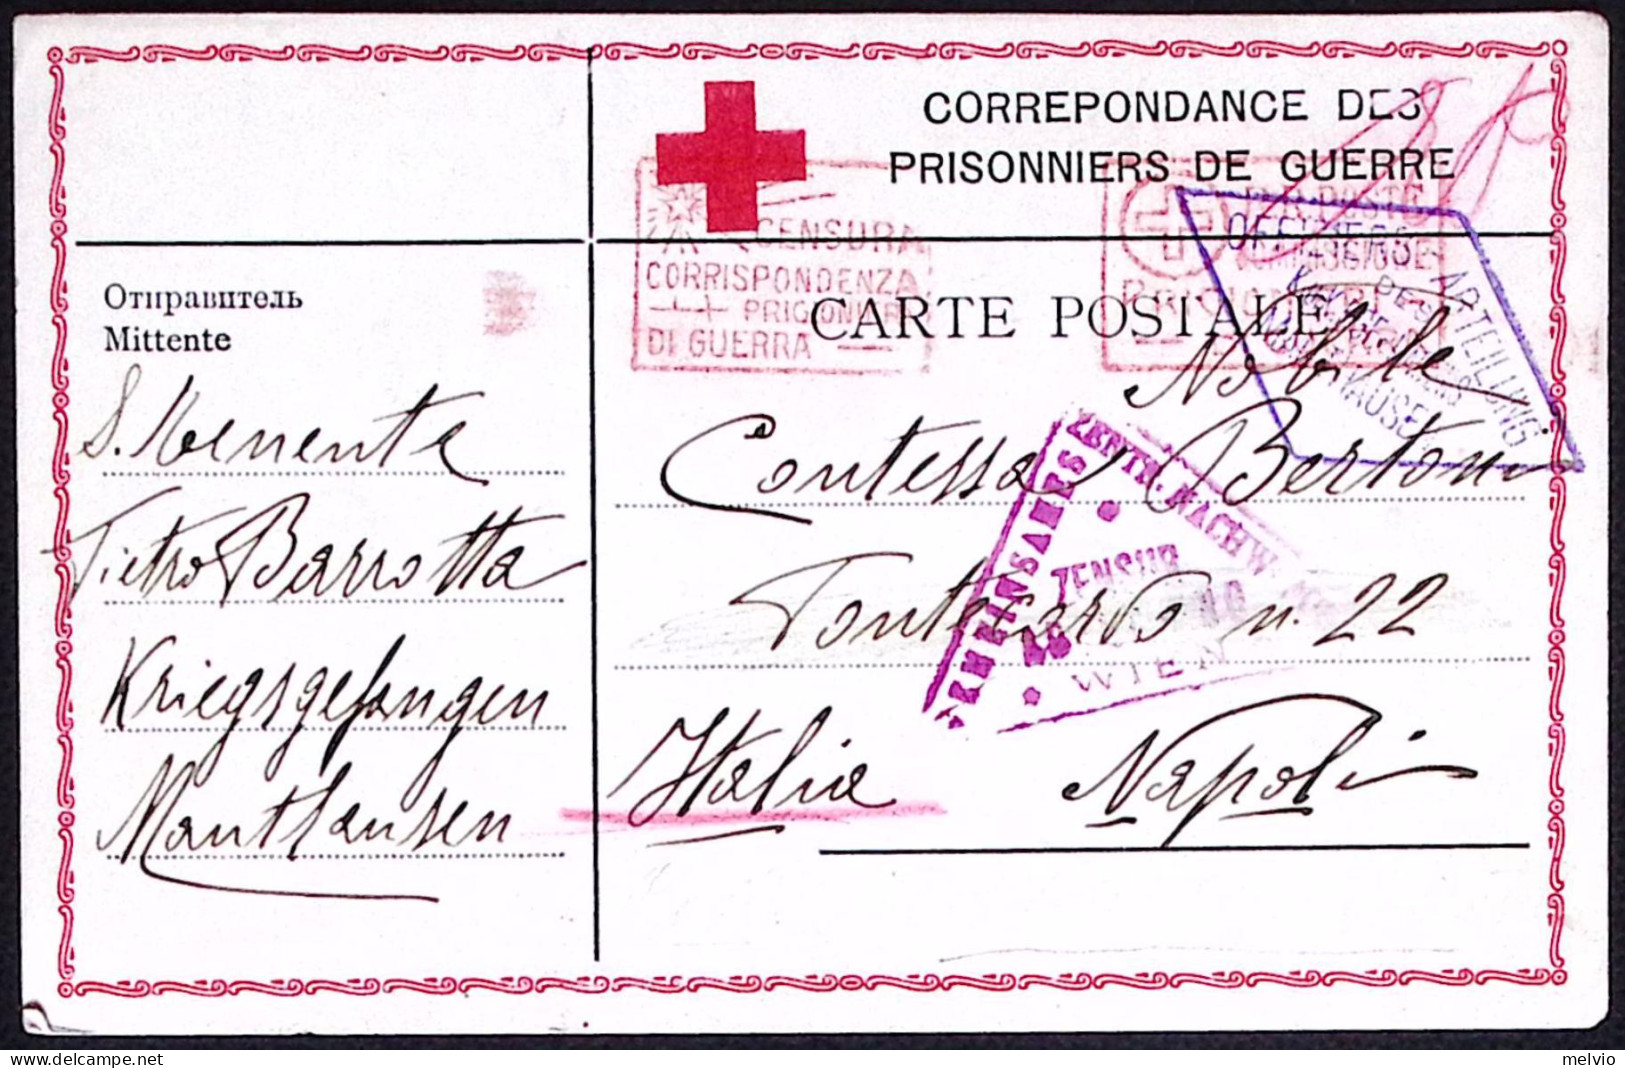 1916-Croce Rossa Cartolina Postale Prigioniero Di Guerra In Manthausen - Rotes Kreuz